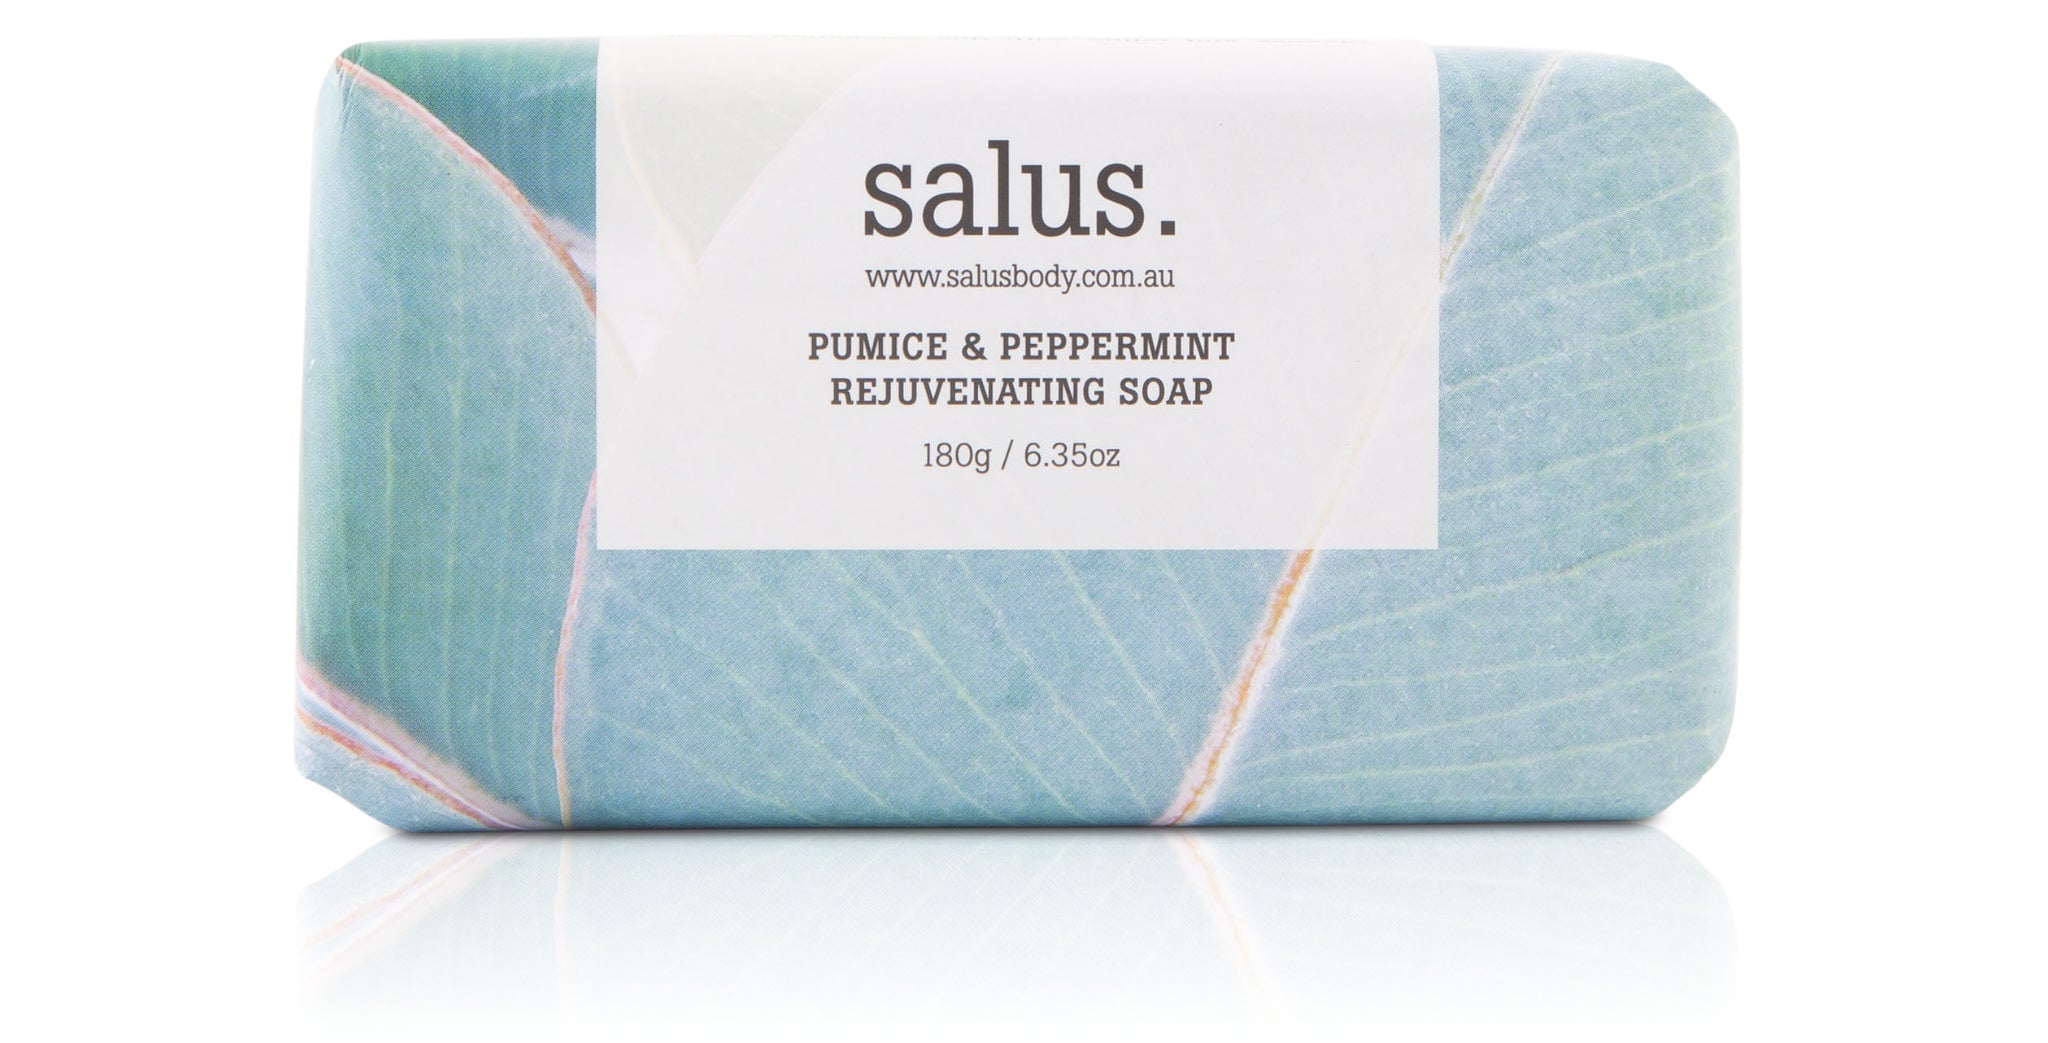 Salus Body - Pumice & Peppermint Rejuvenating Soap